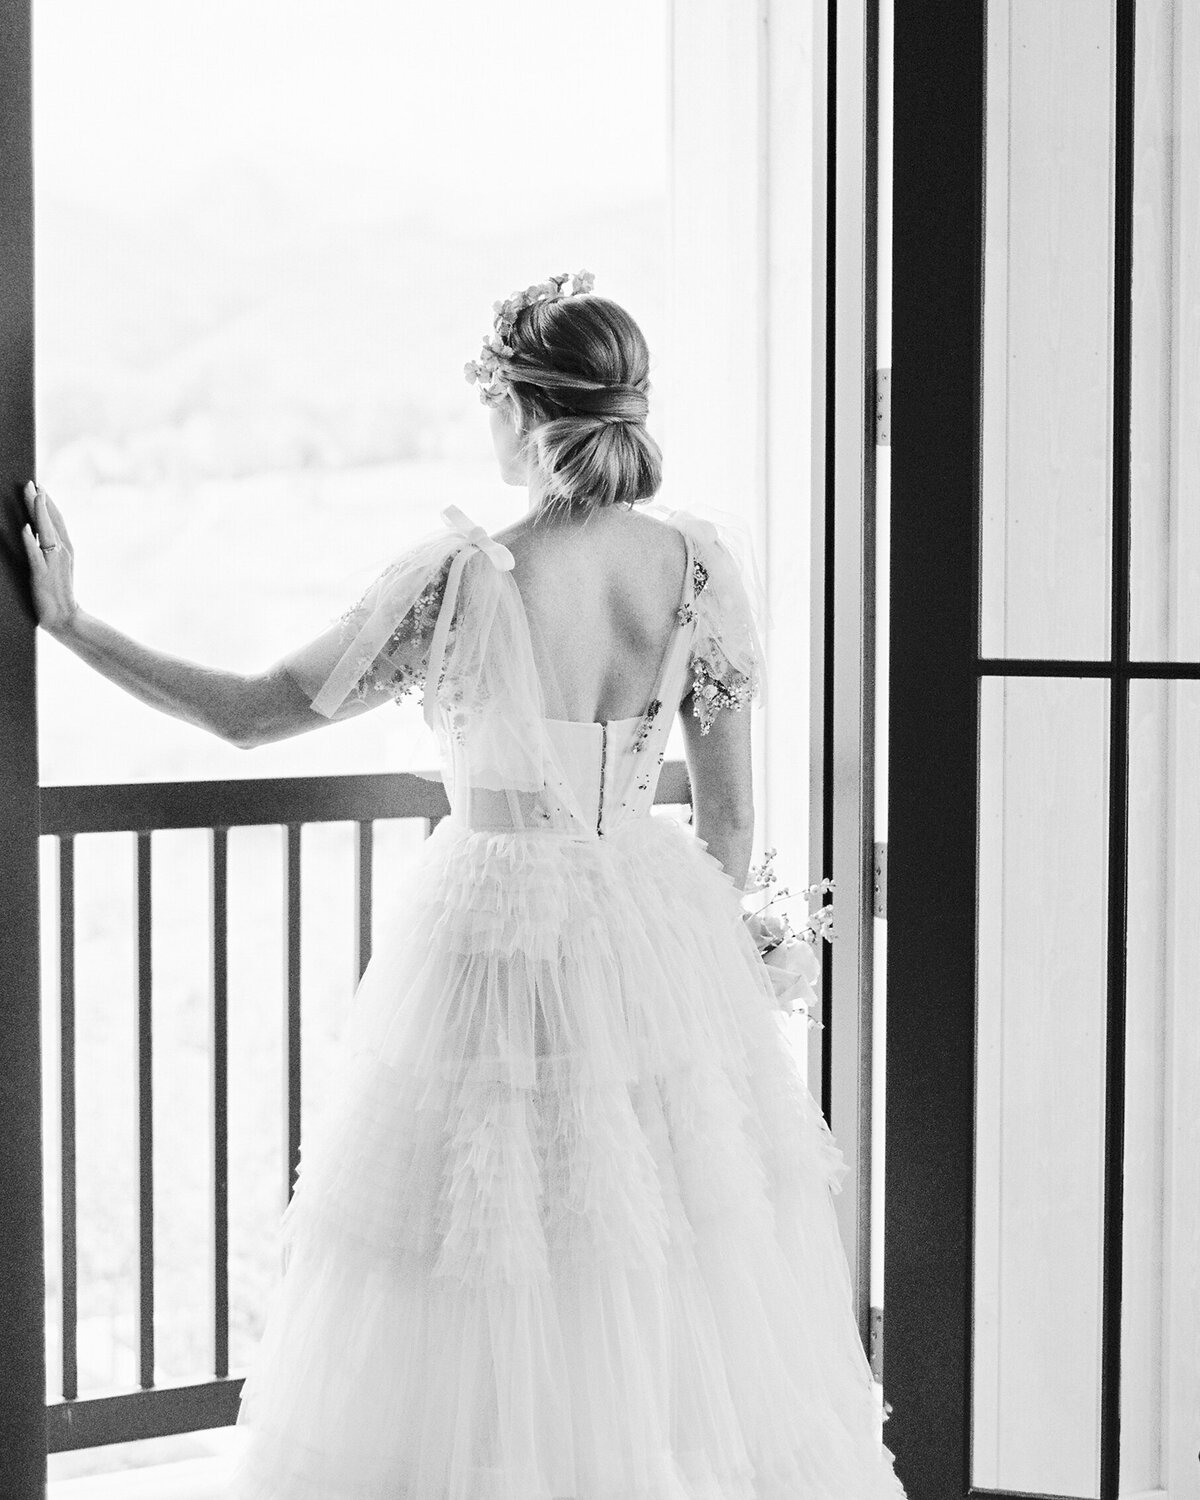 Bride looks outside the window on a balcony